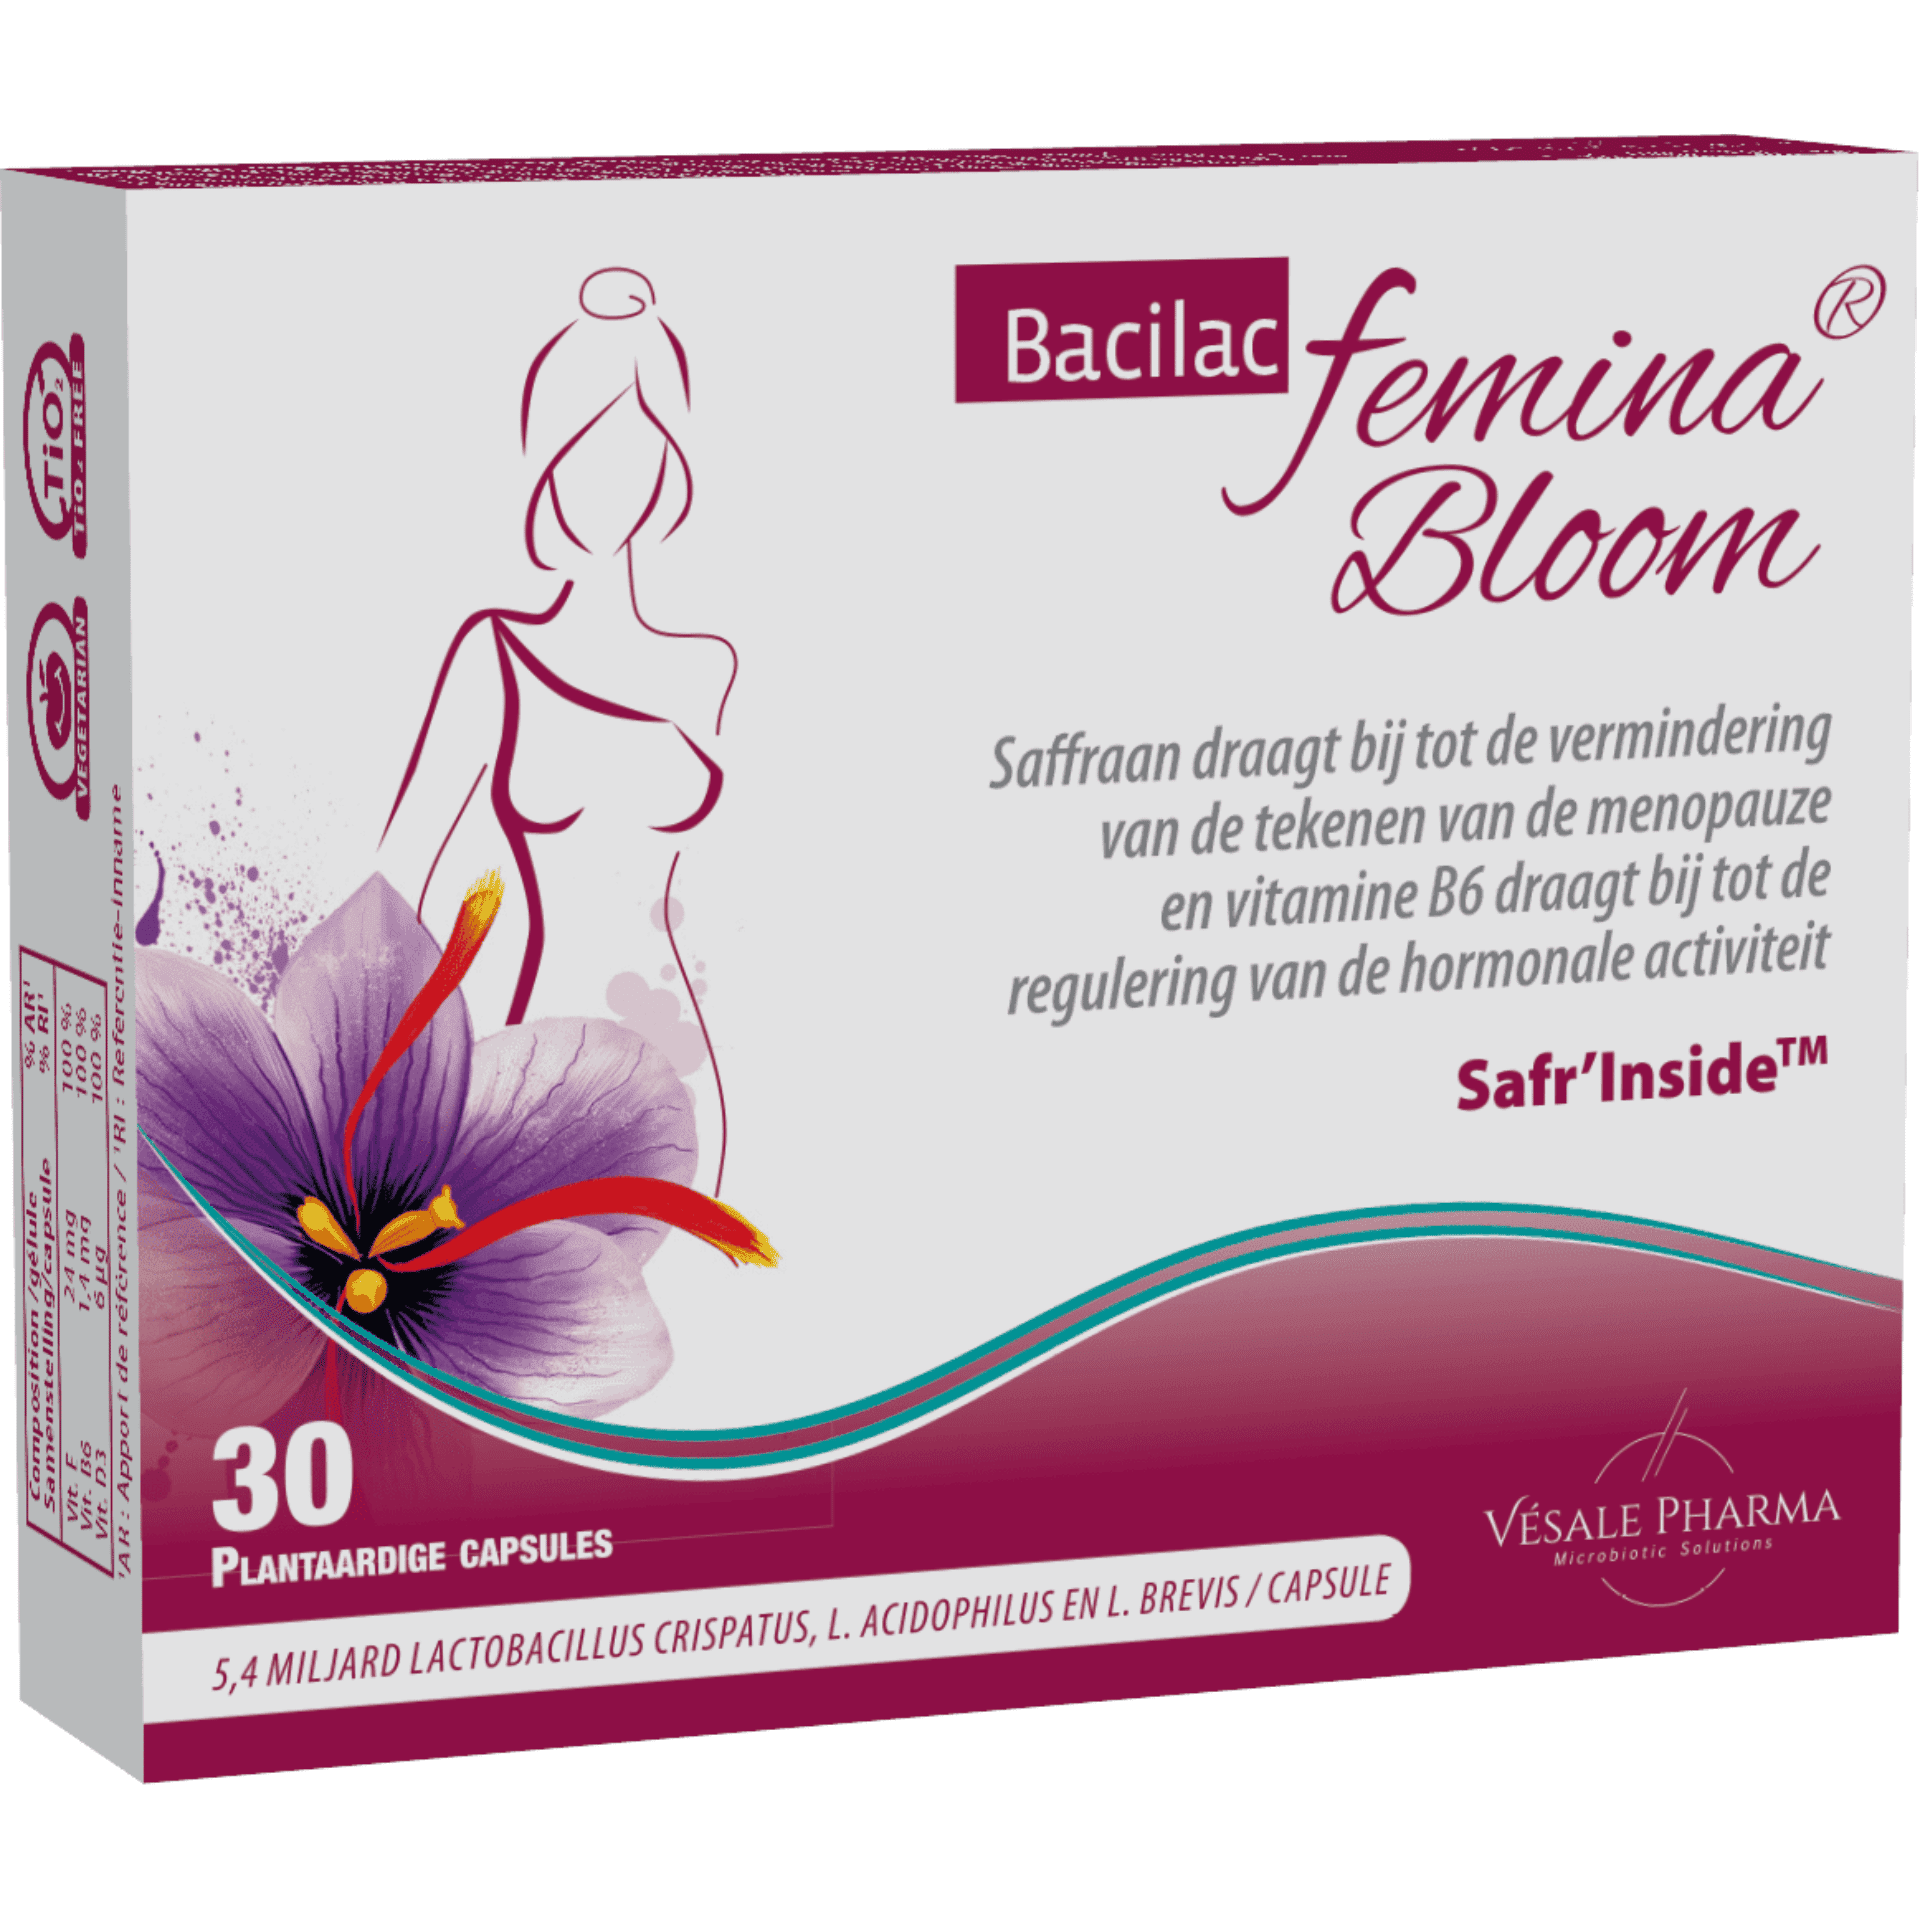 Bacilac Femina Bloom 30 capsules